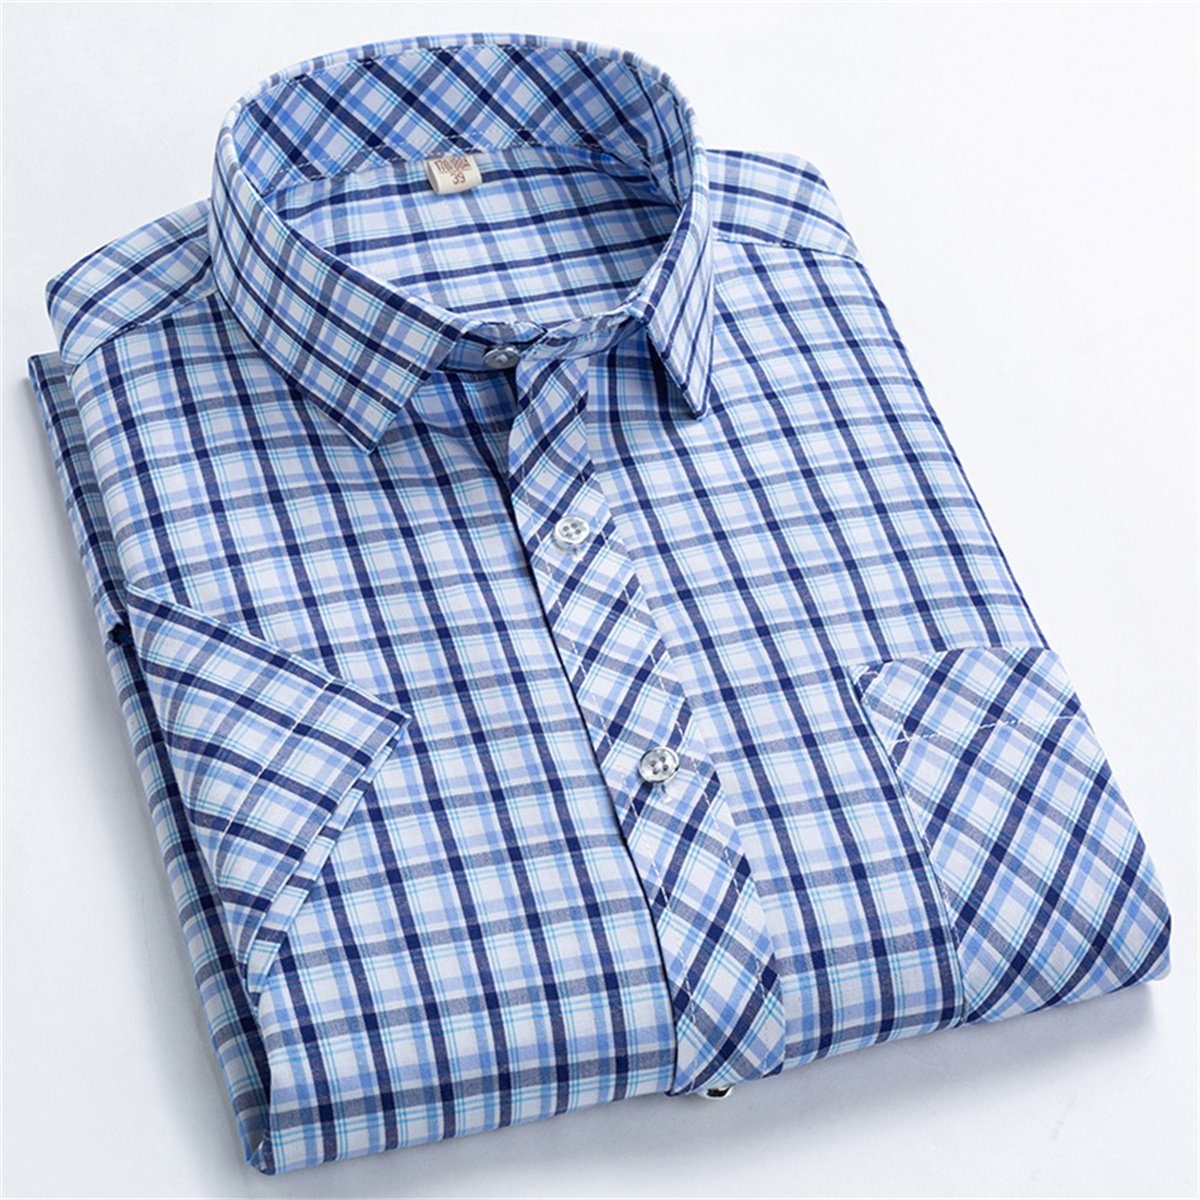 Discaver Trachtenhemd Herrenhemd, reguläre kurzärmlig, Passform, lässiges azurblau Popeline-Hemd